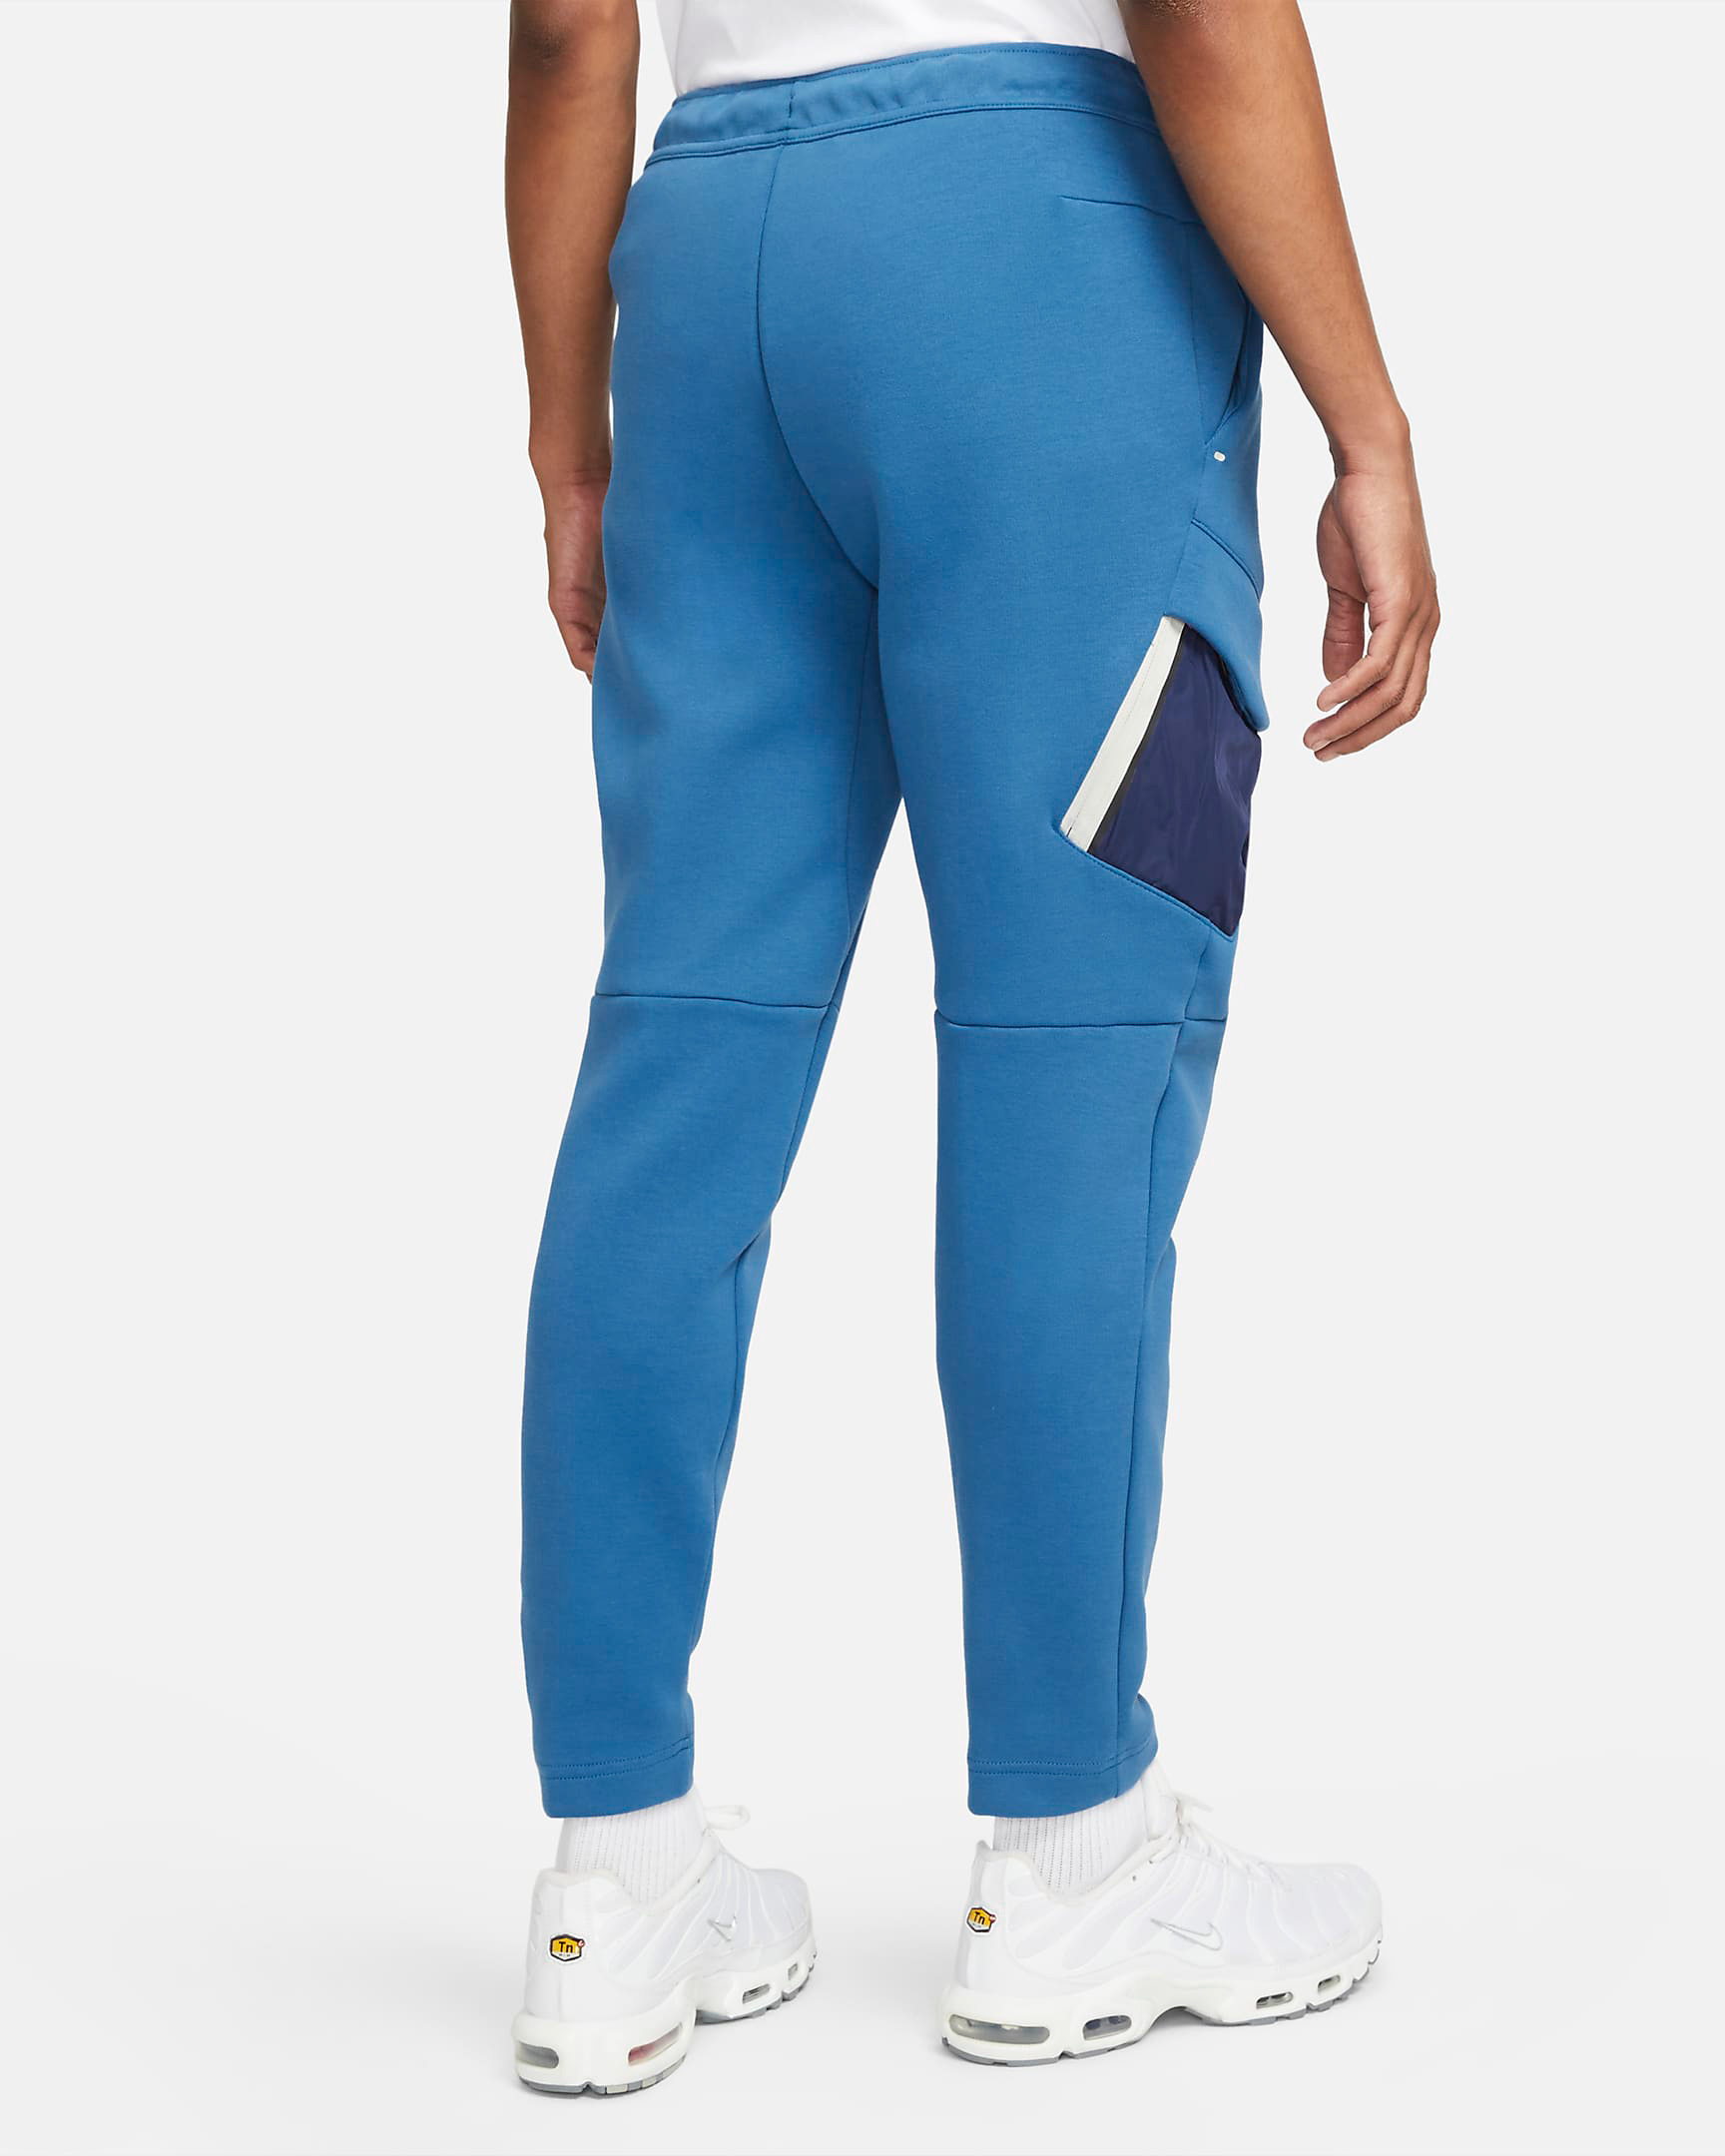 nike-tech-fleece-utility-pants-dark-marina-blue-2